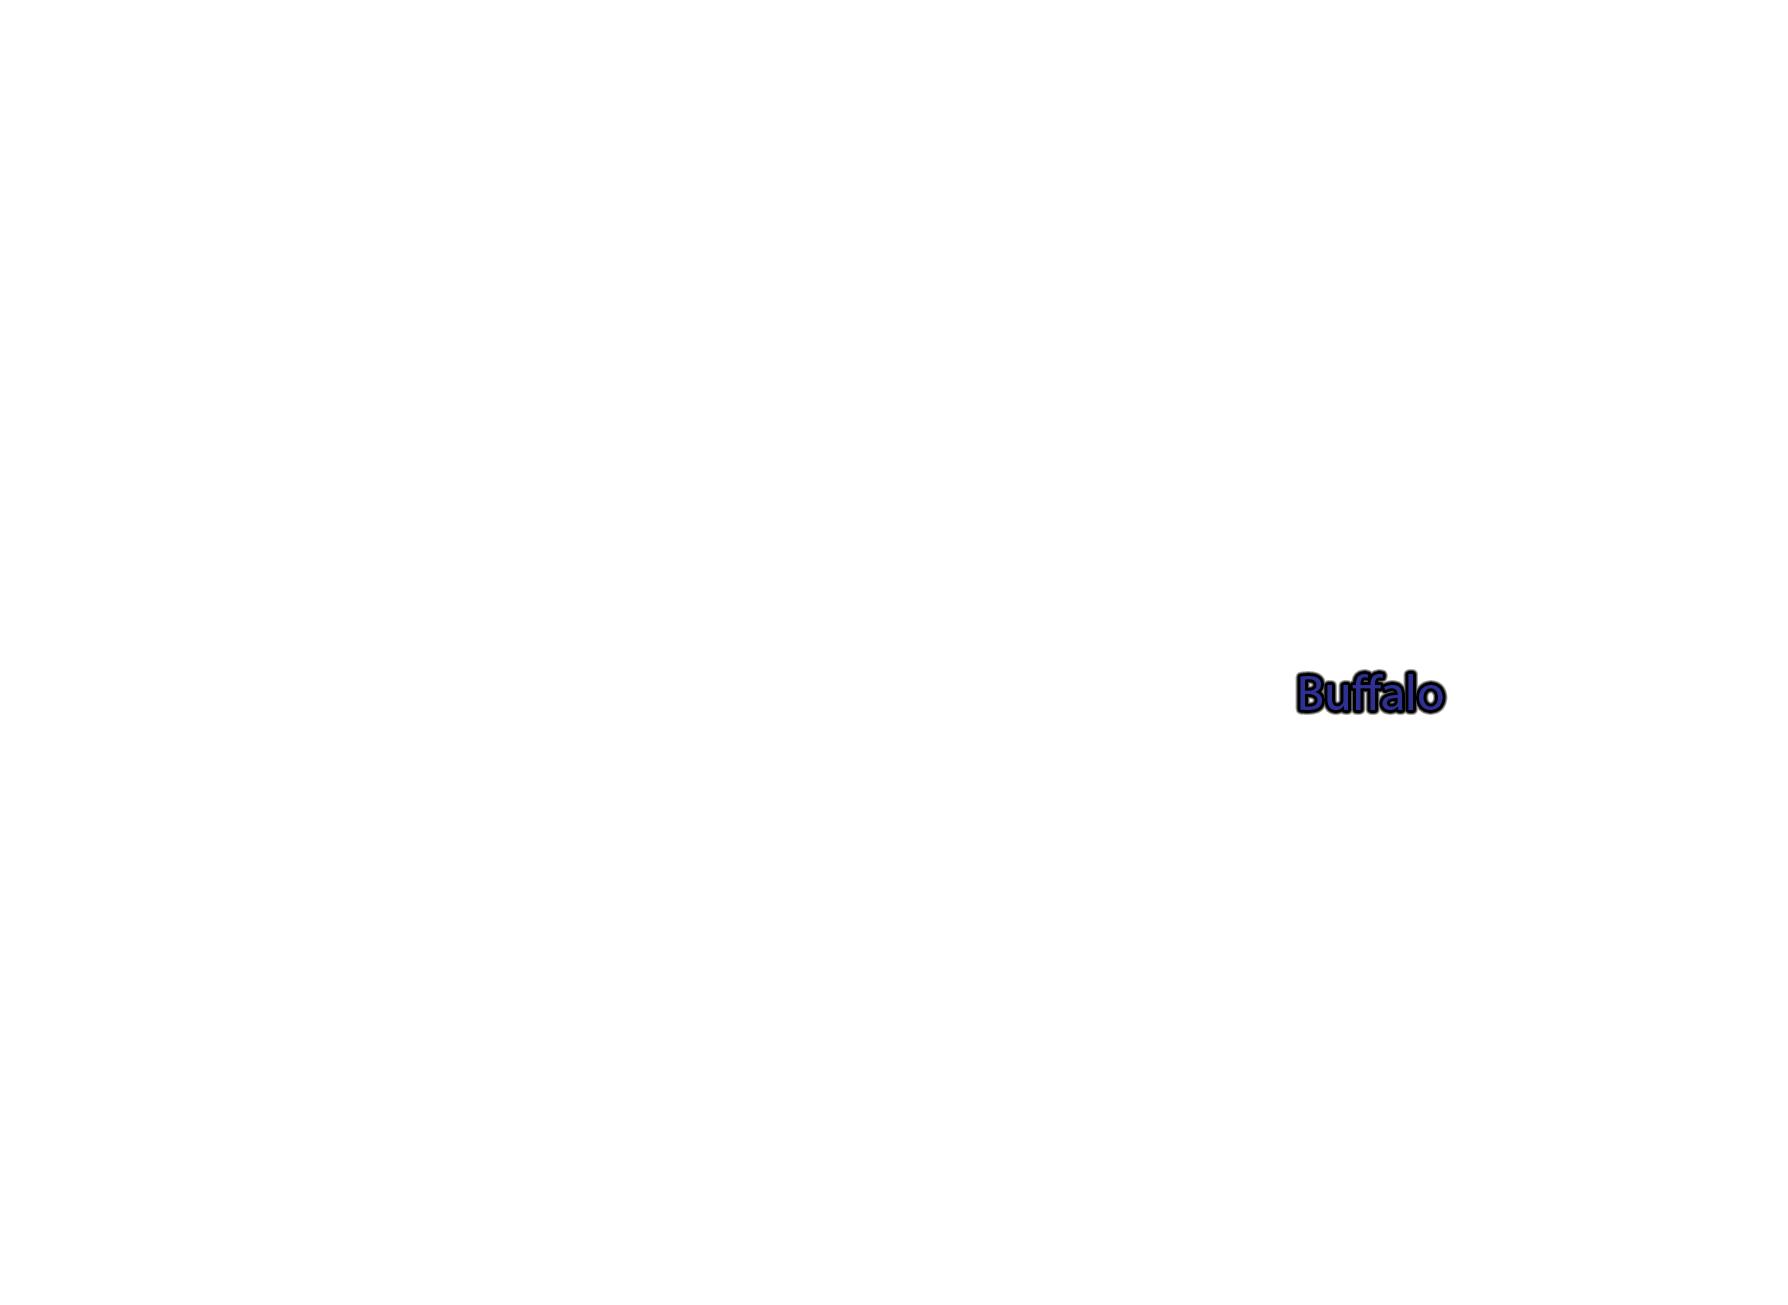 Buffalo label with glow